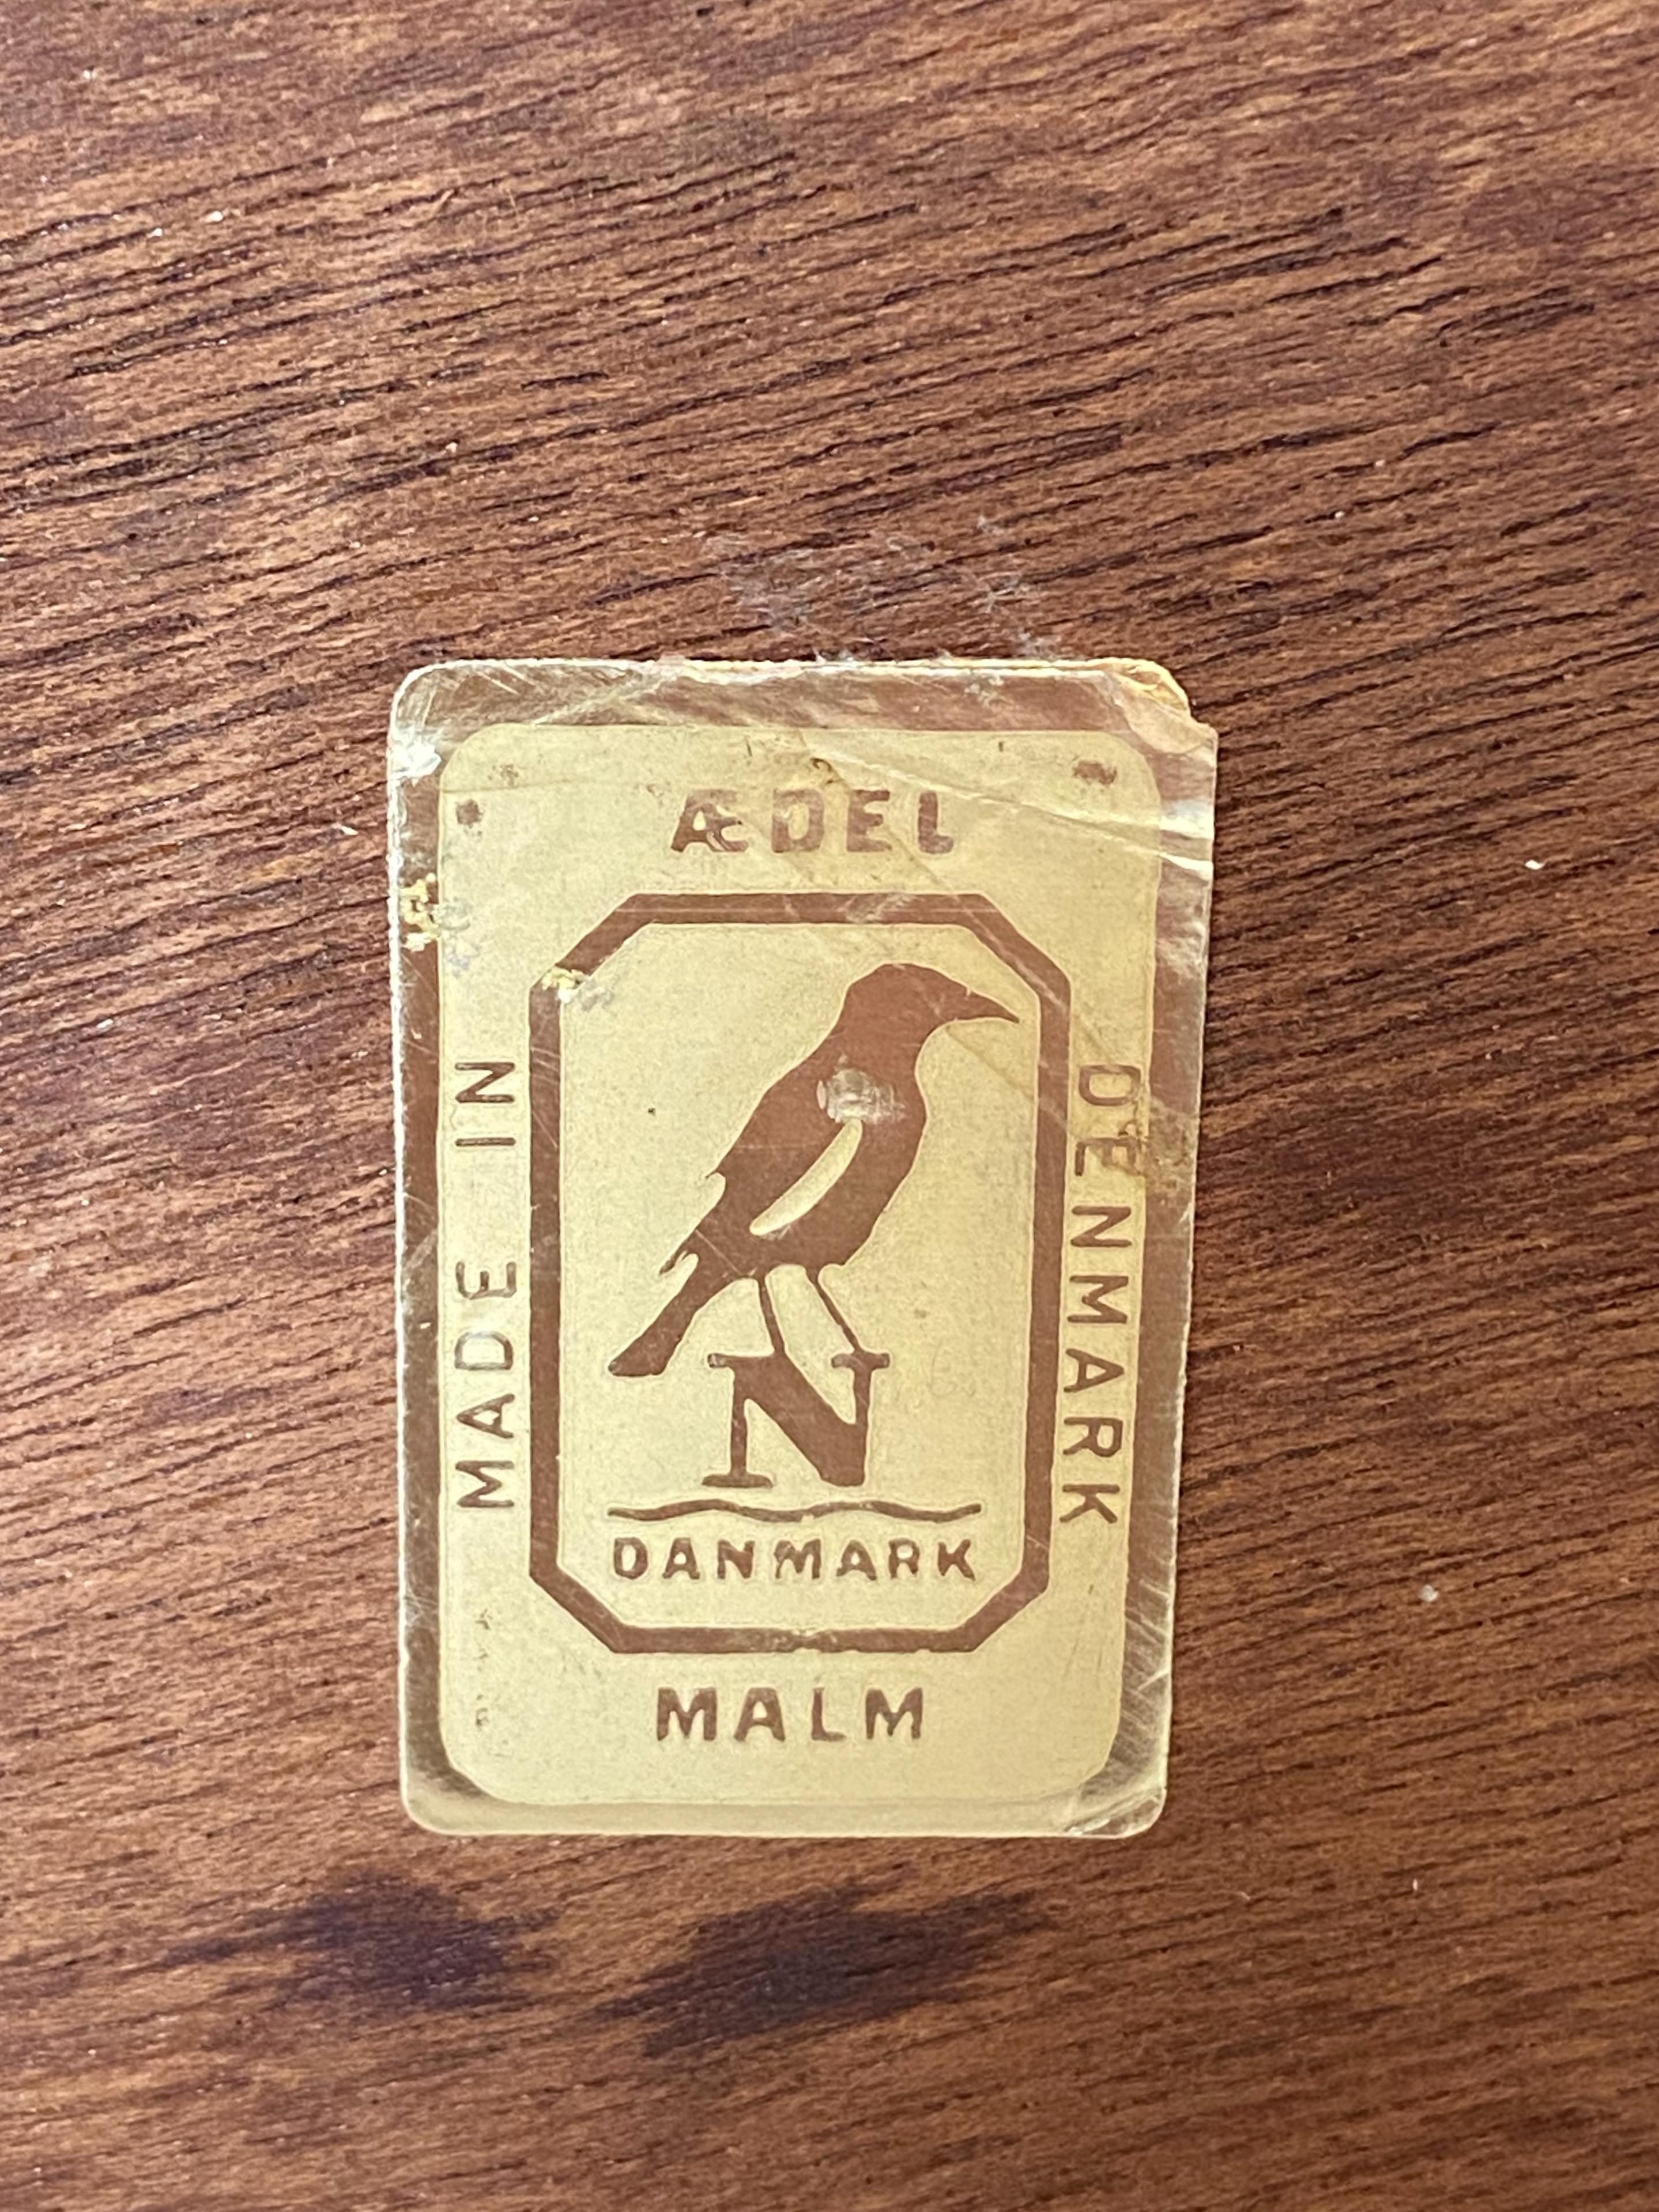 1 of 2 Art Deco Bronze Cigar Box From Ædel Malm, 1940s Denmark 4